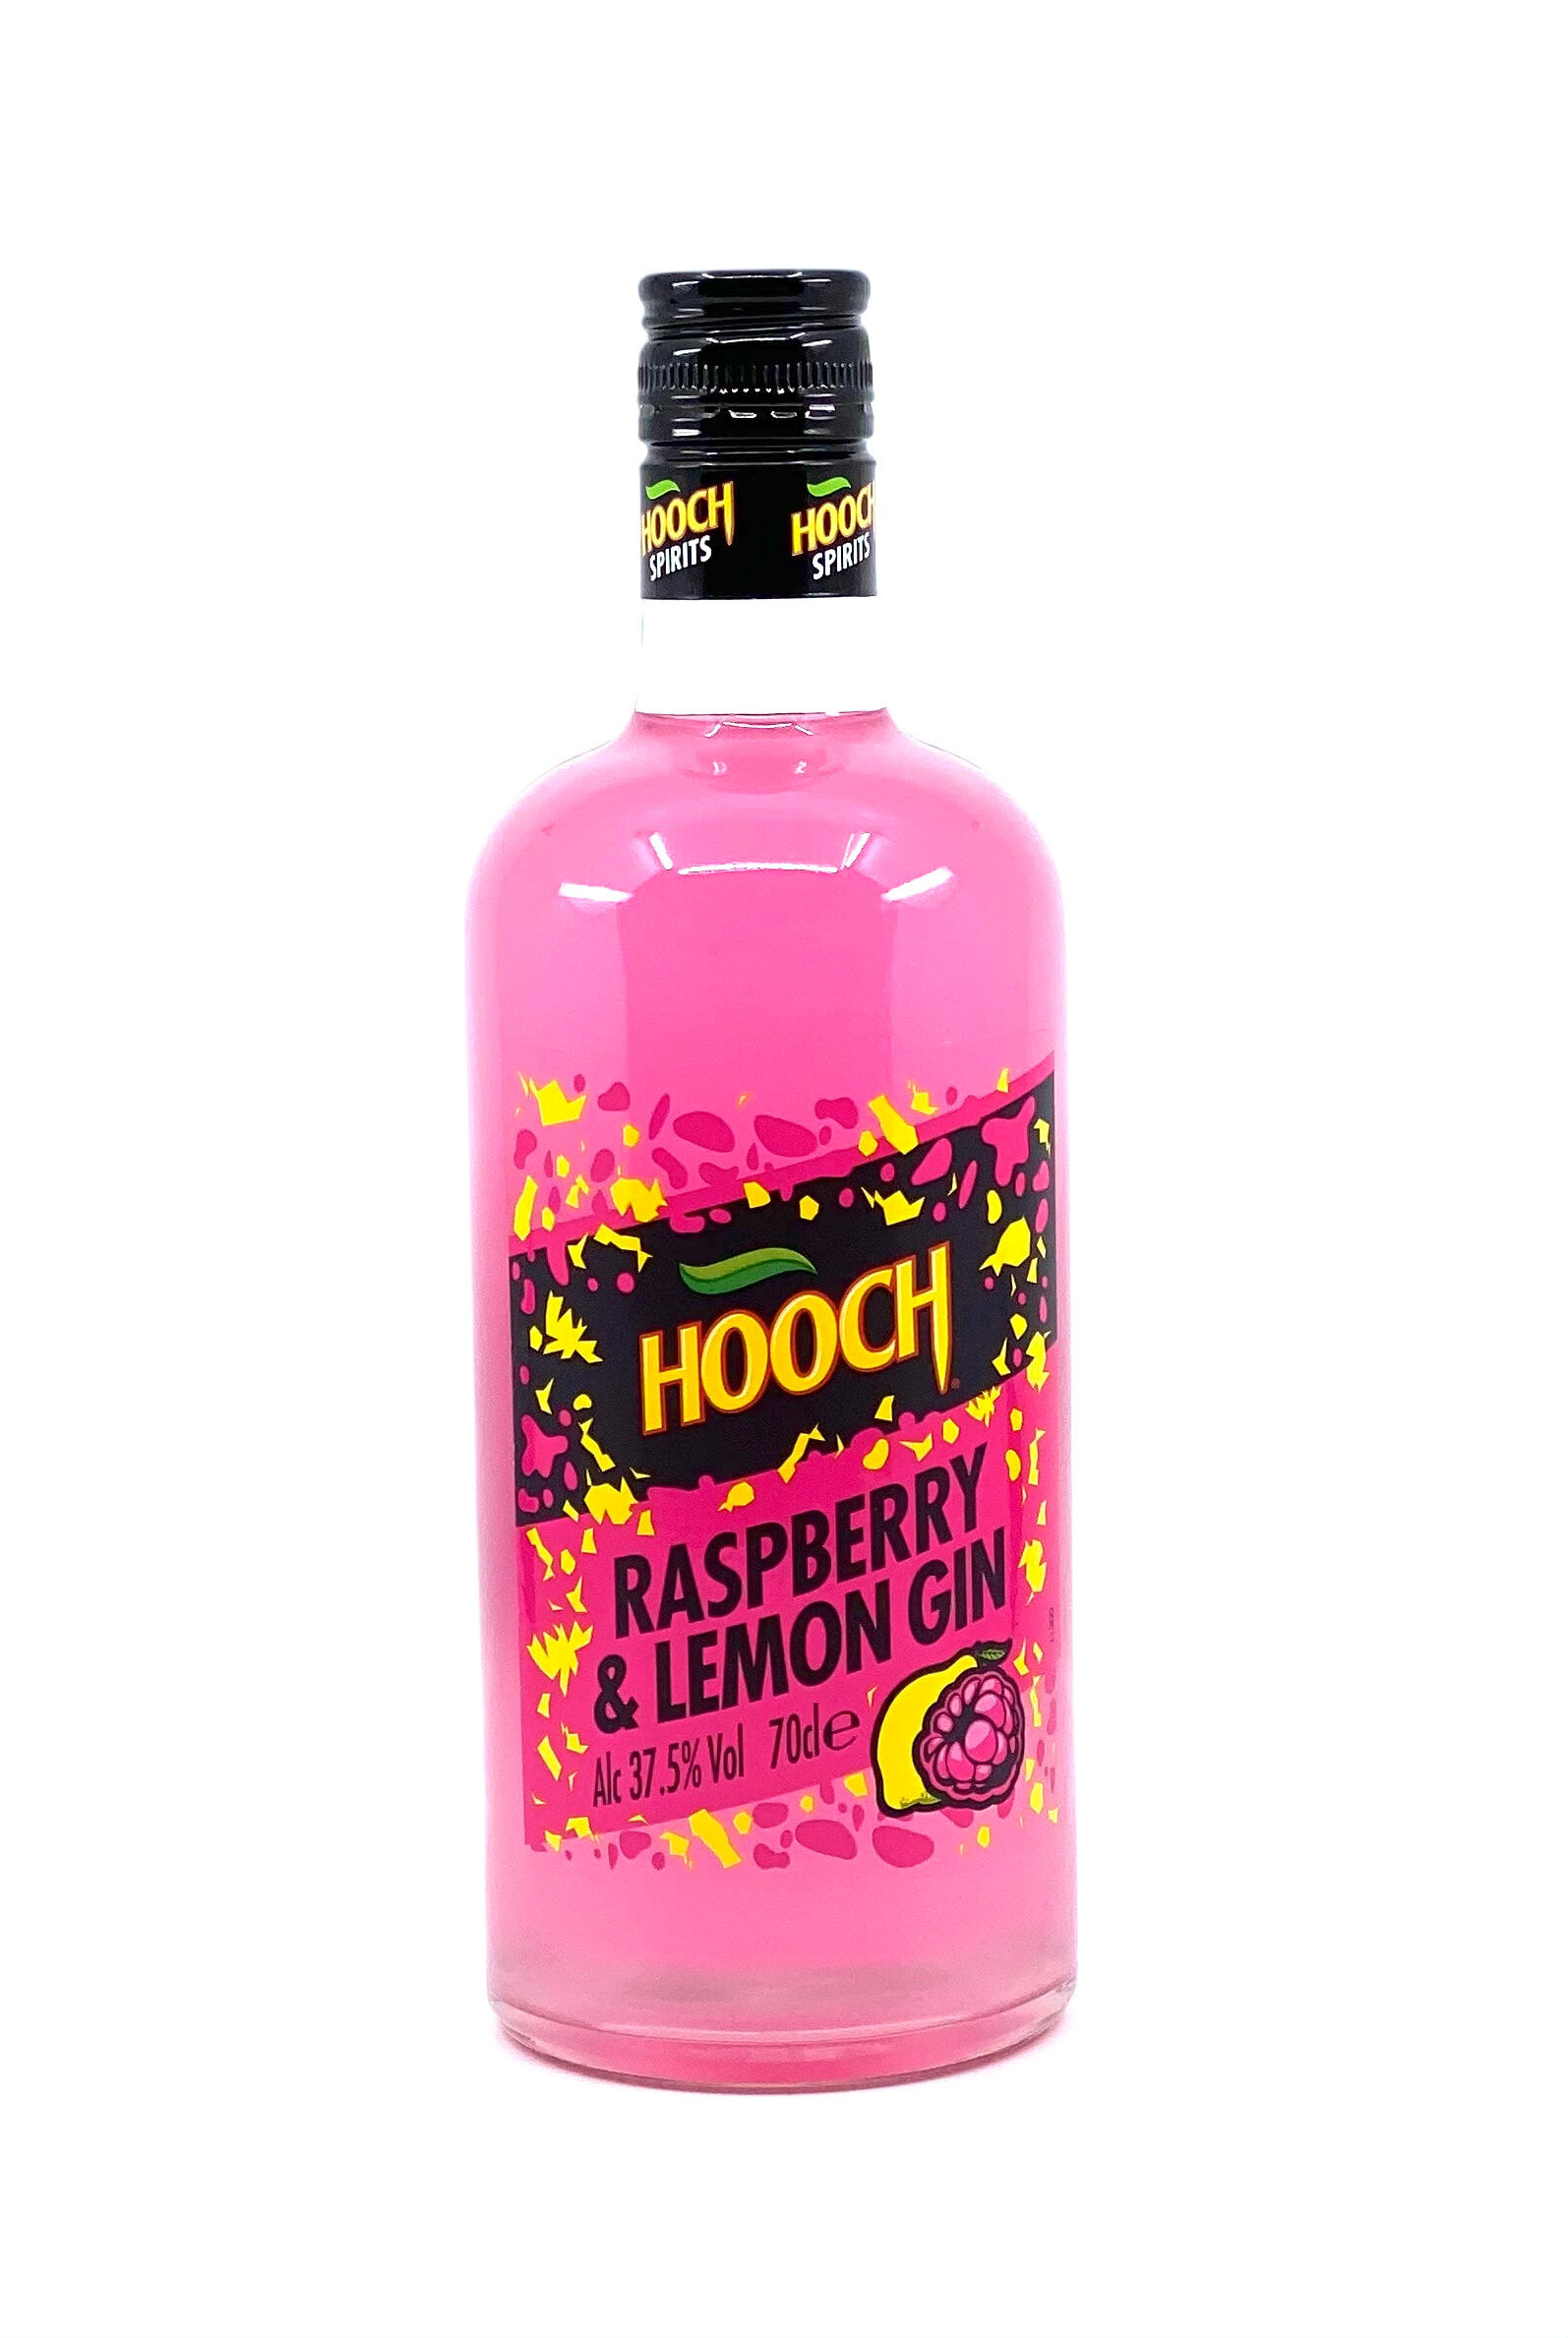 Hooch Raspberry and Lemon Gin